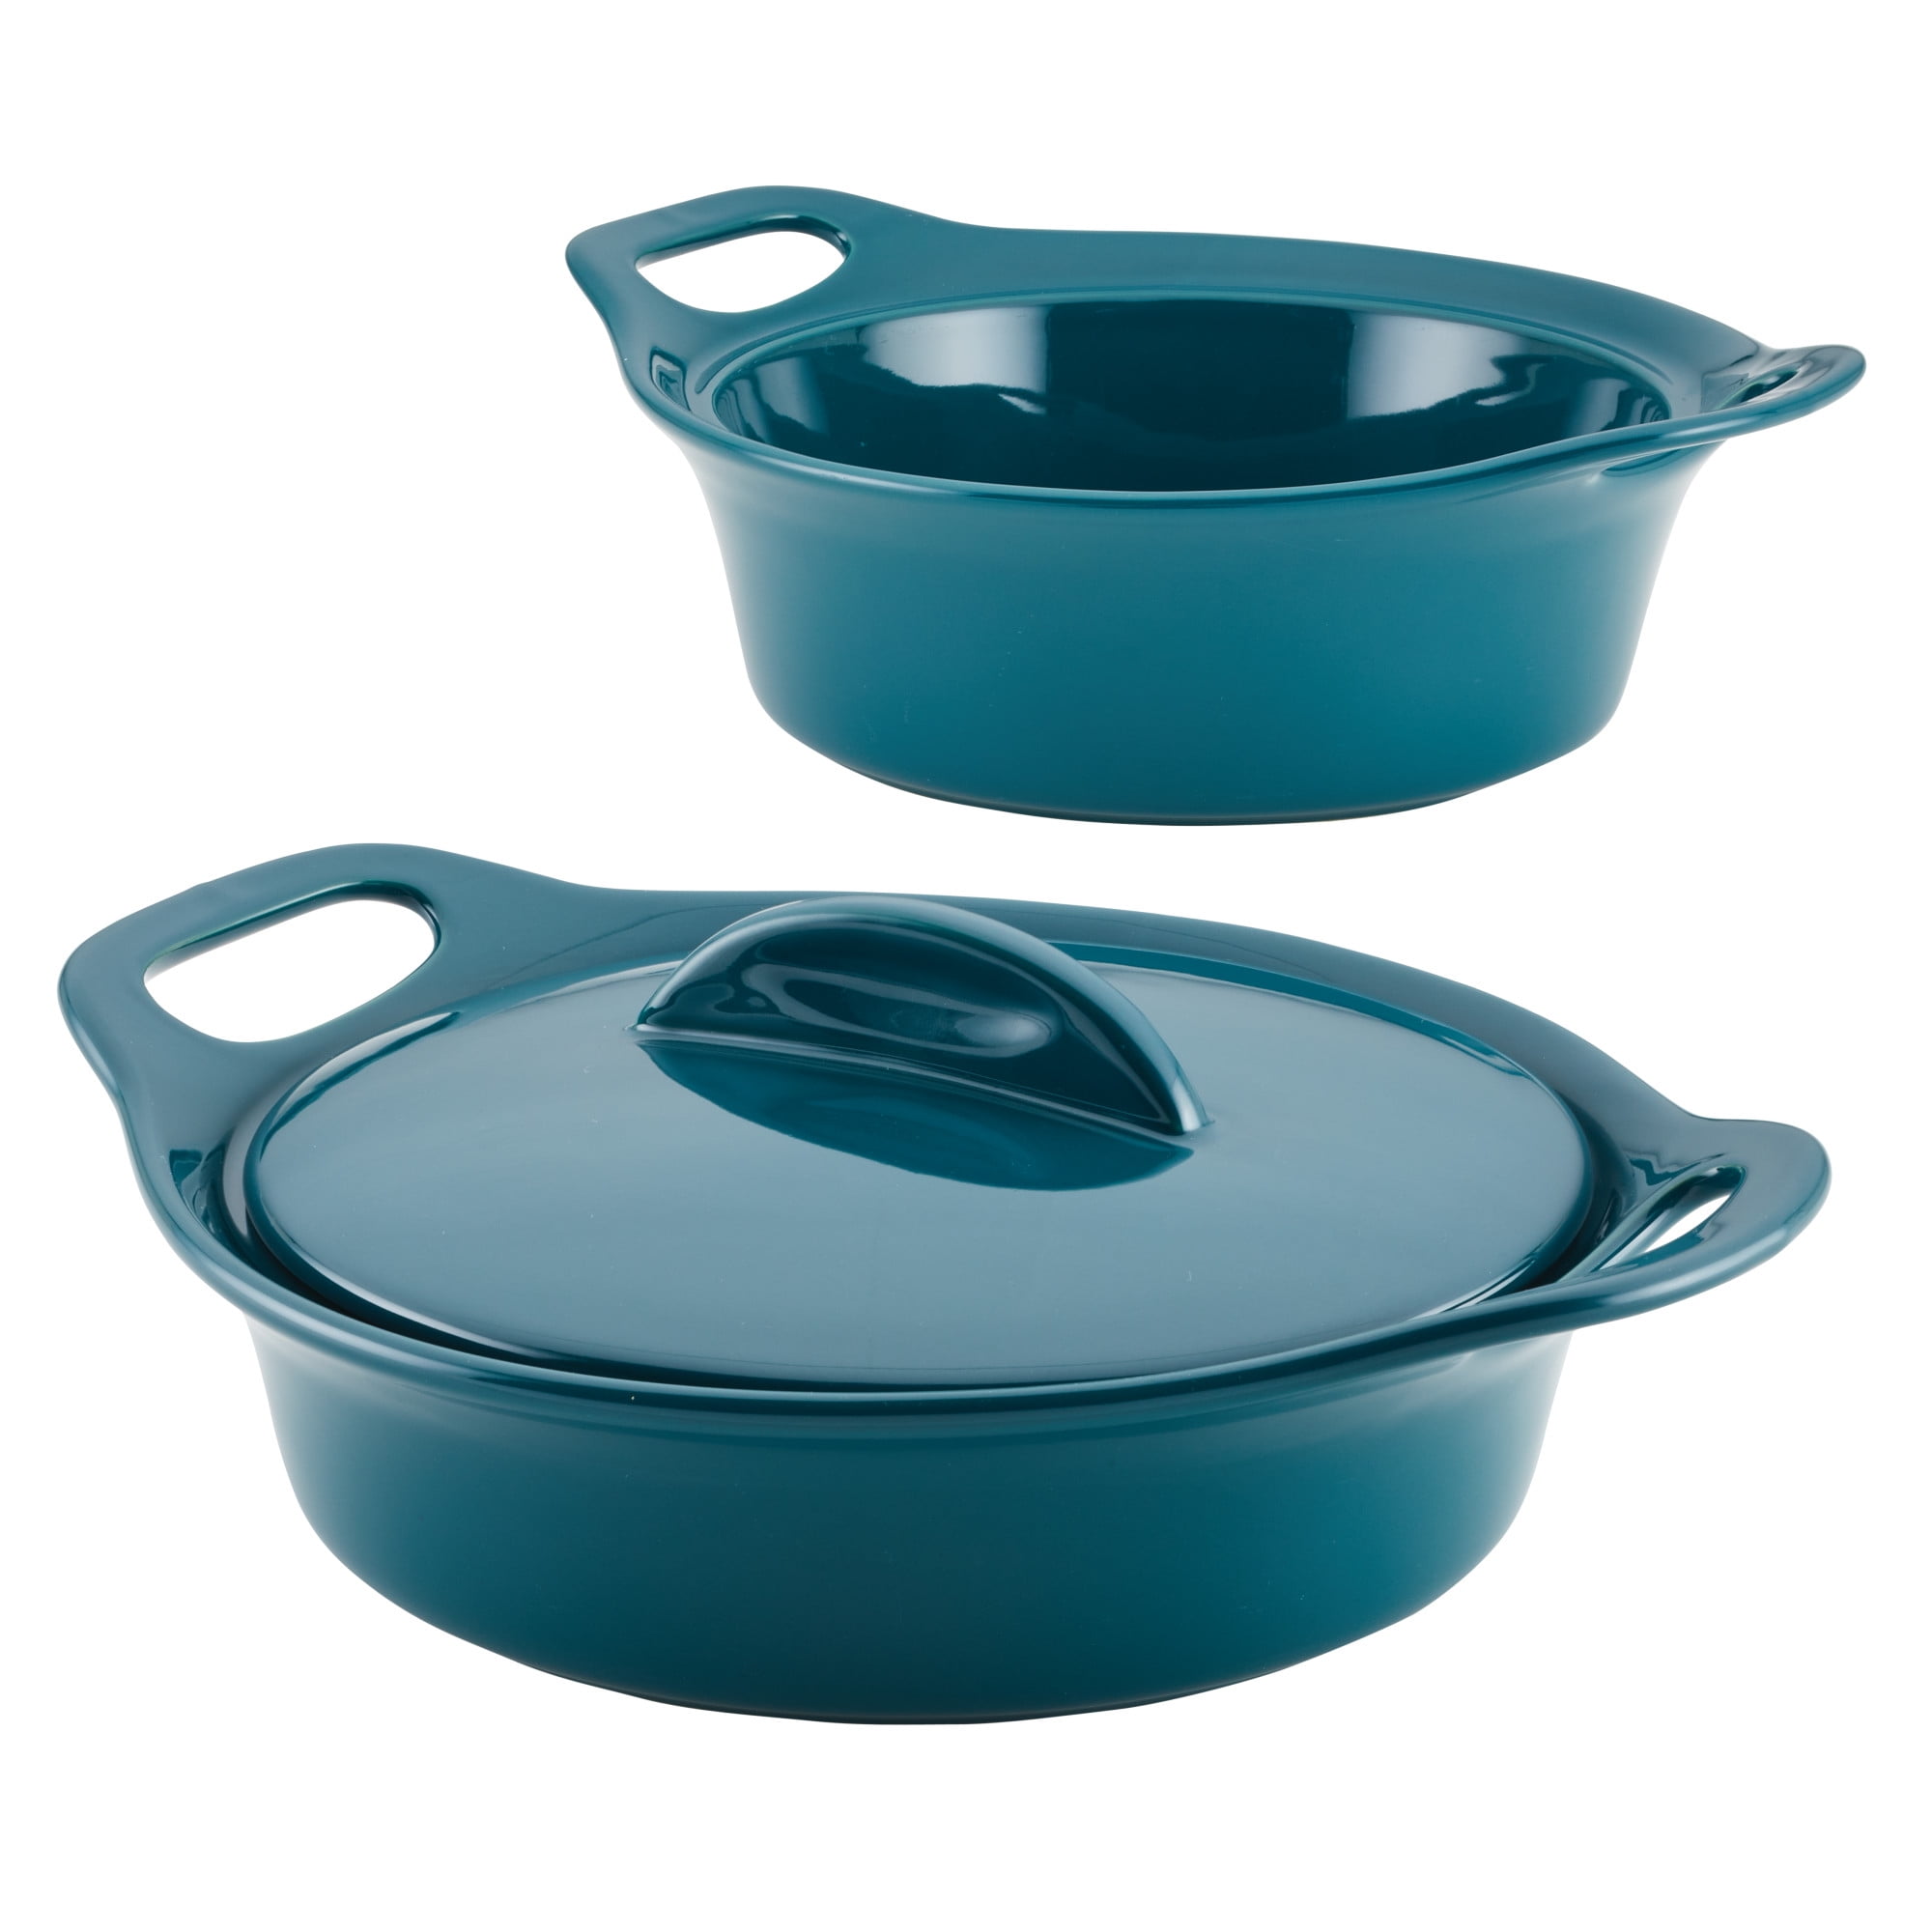 Light Blue Oval 2 Piece Solid Glaze Ceramics Au Gratin Bakeware/Baker Set 